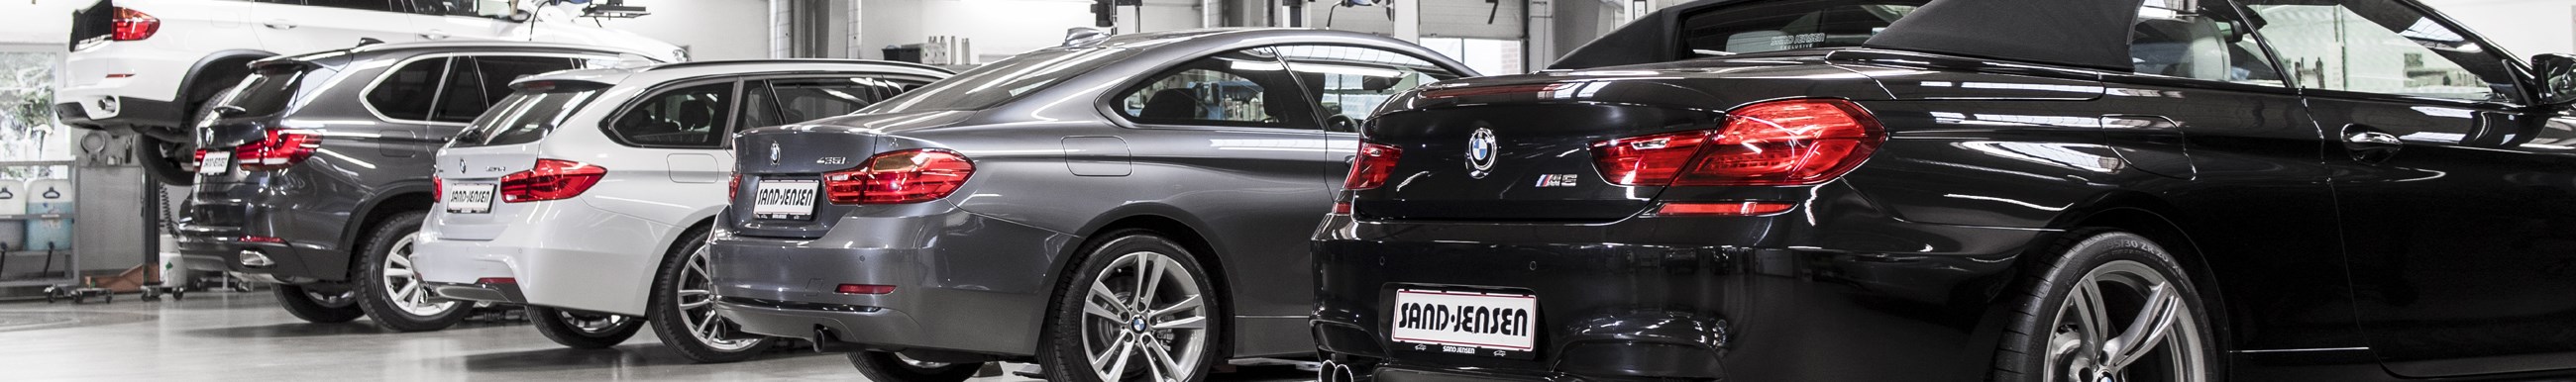 BMW-Fahrzeuge im Autohaus Sandjensen